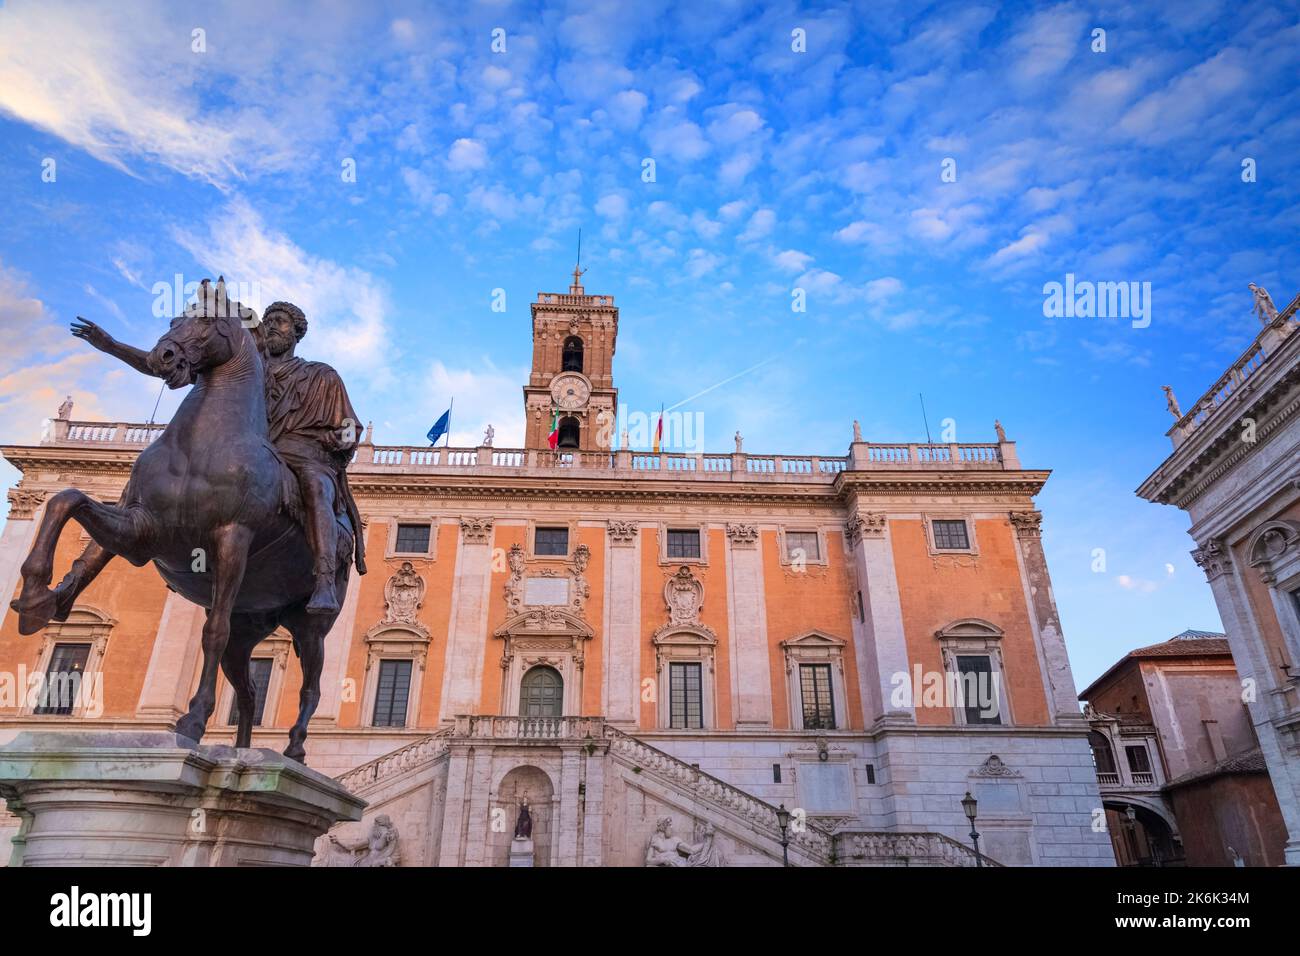 The Capitoline Hill in Rome, Italy: Statue of Roman Emperor Marcus Aurelius on horseback in front of the Palazzo Senatorio. Stock Photo